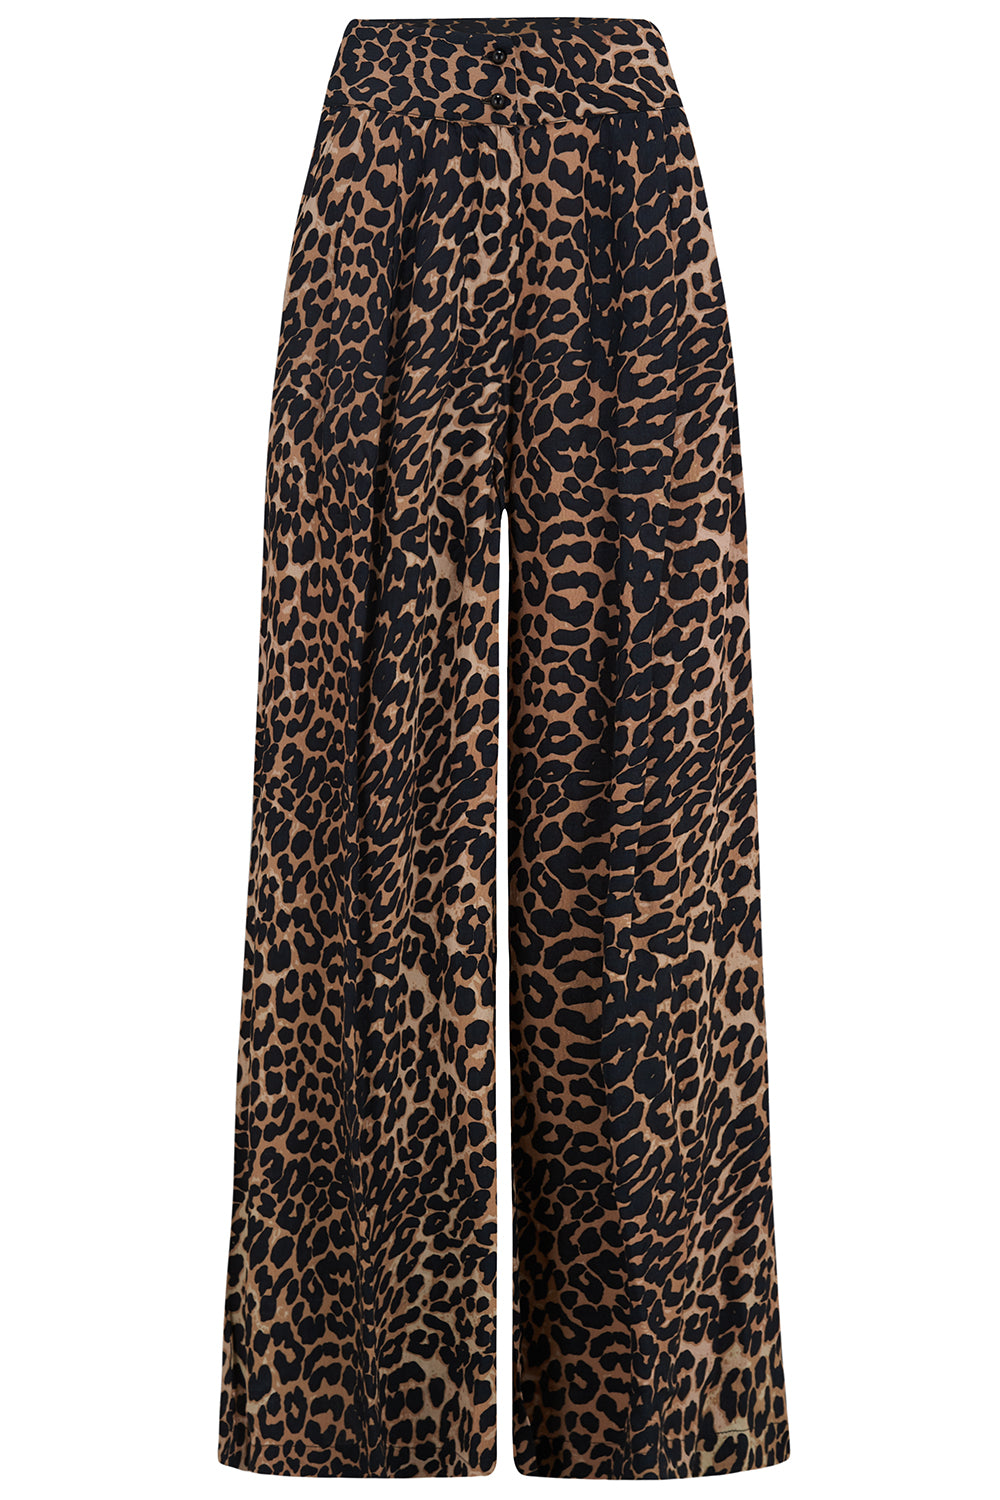 Dress Pants - Light brown/leopard print - Ladies | H&M US